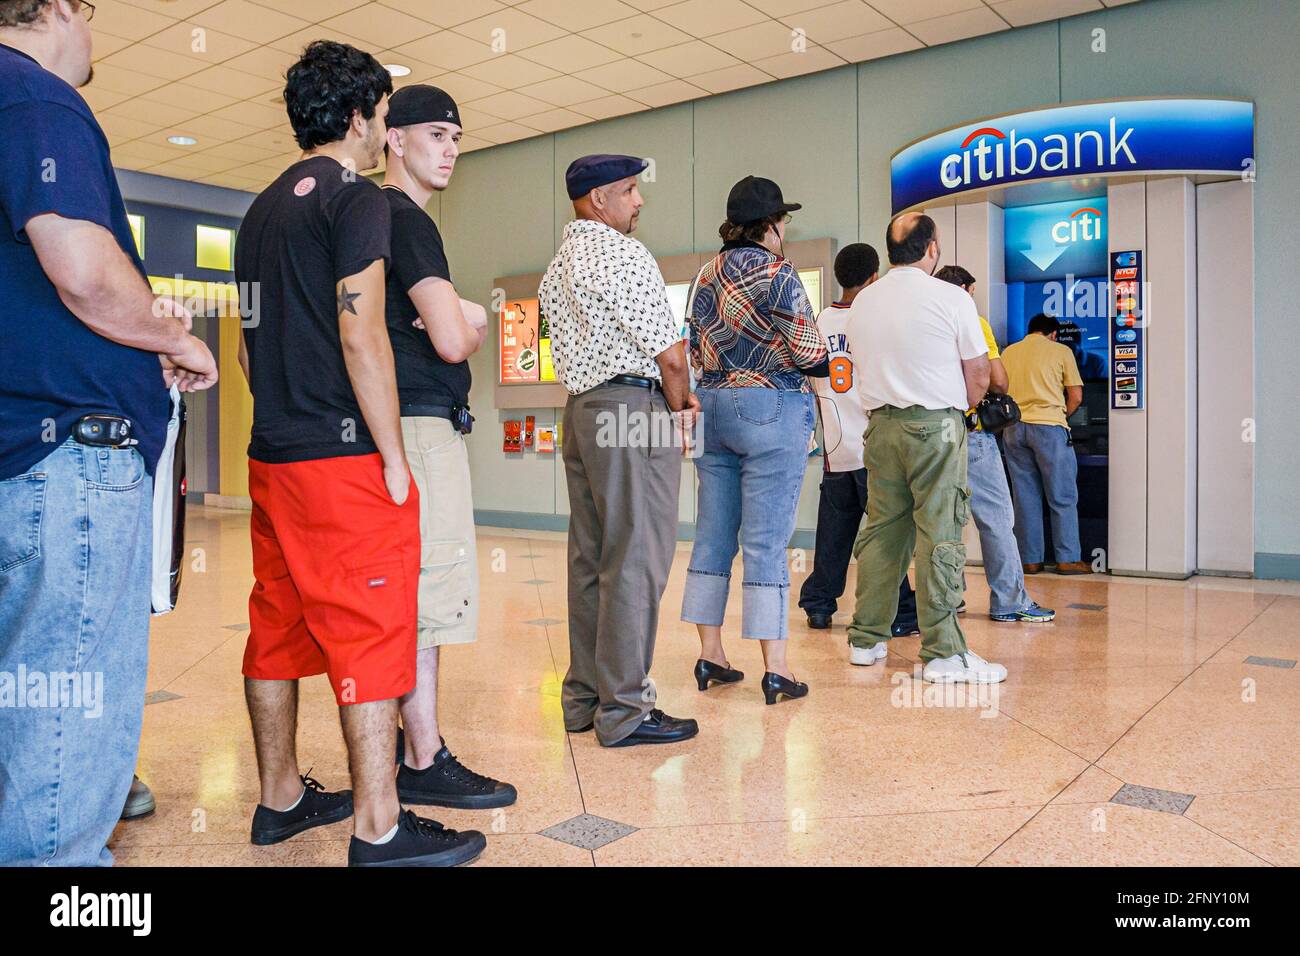 Florida,Miami Beach Convention Center,centre,ATM Citibank bank customers line queue, Stock Photo